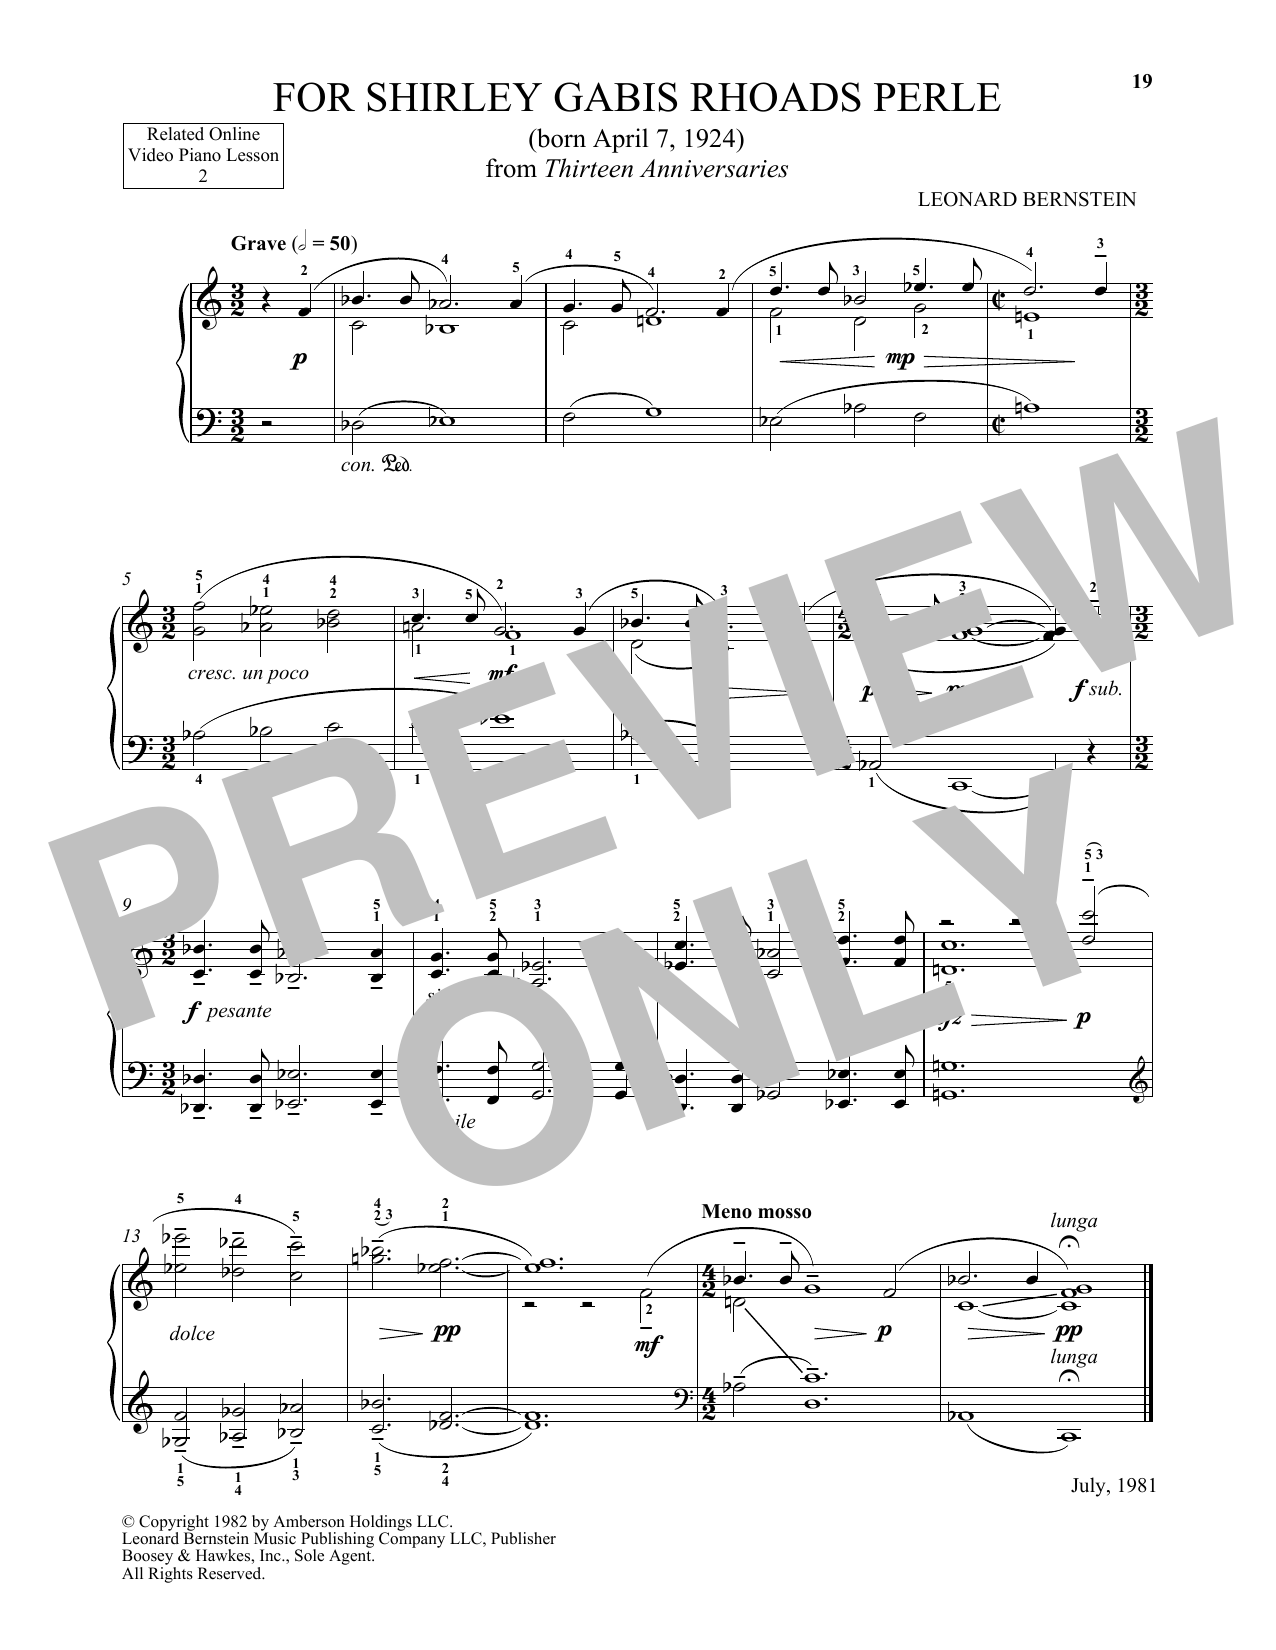 Michael Mizrahi For Shirley Gabis Rhoads Perle Sheet Music Notes & Chords for Piano Solo - Download or Print PDF